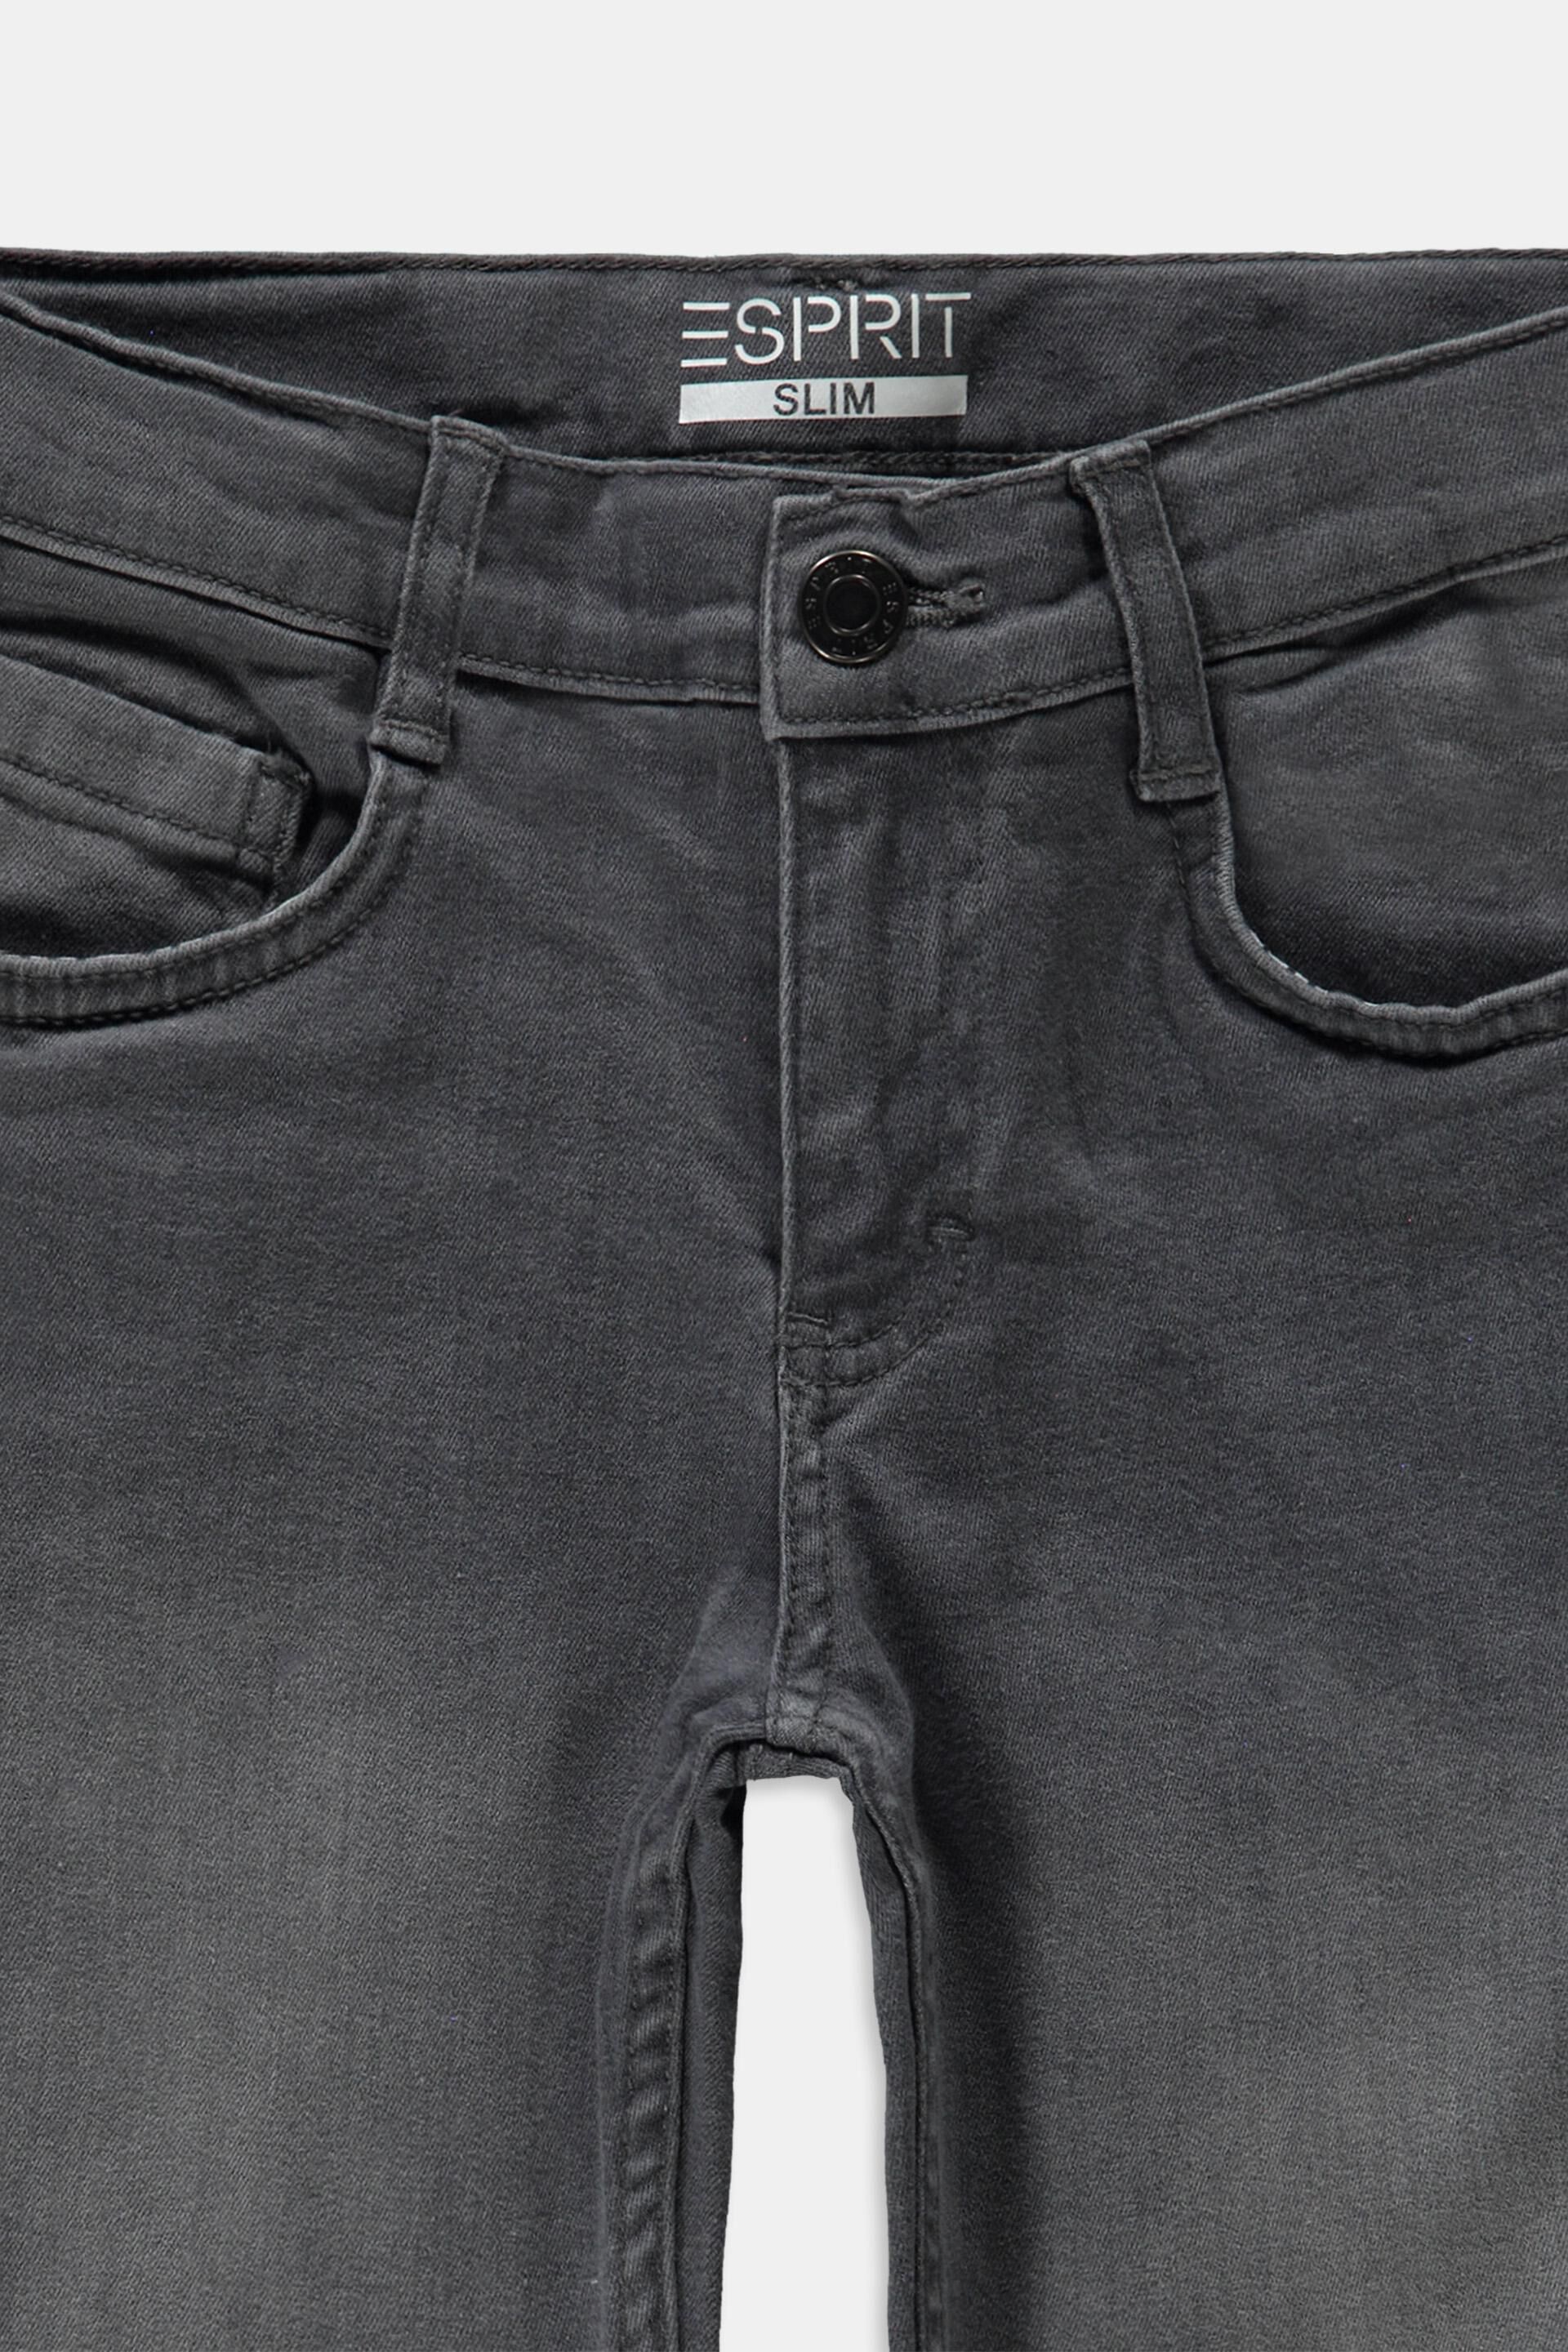 Vingino Jungen Jeans Gr DE 176 Jungen Bekleidung Hosen Jeans 